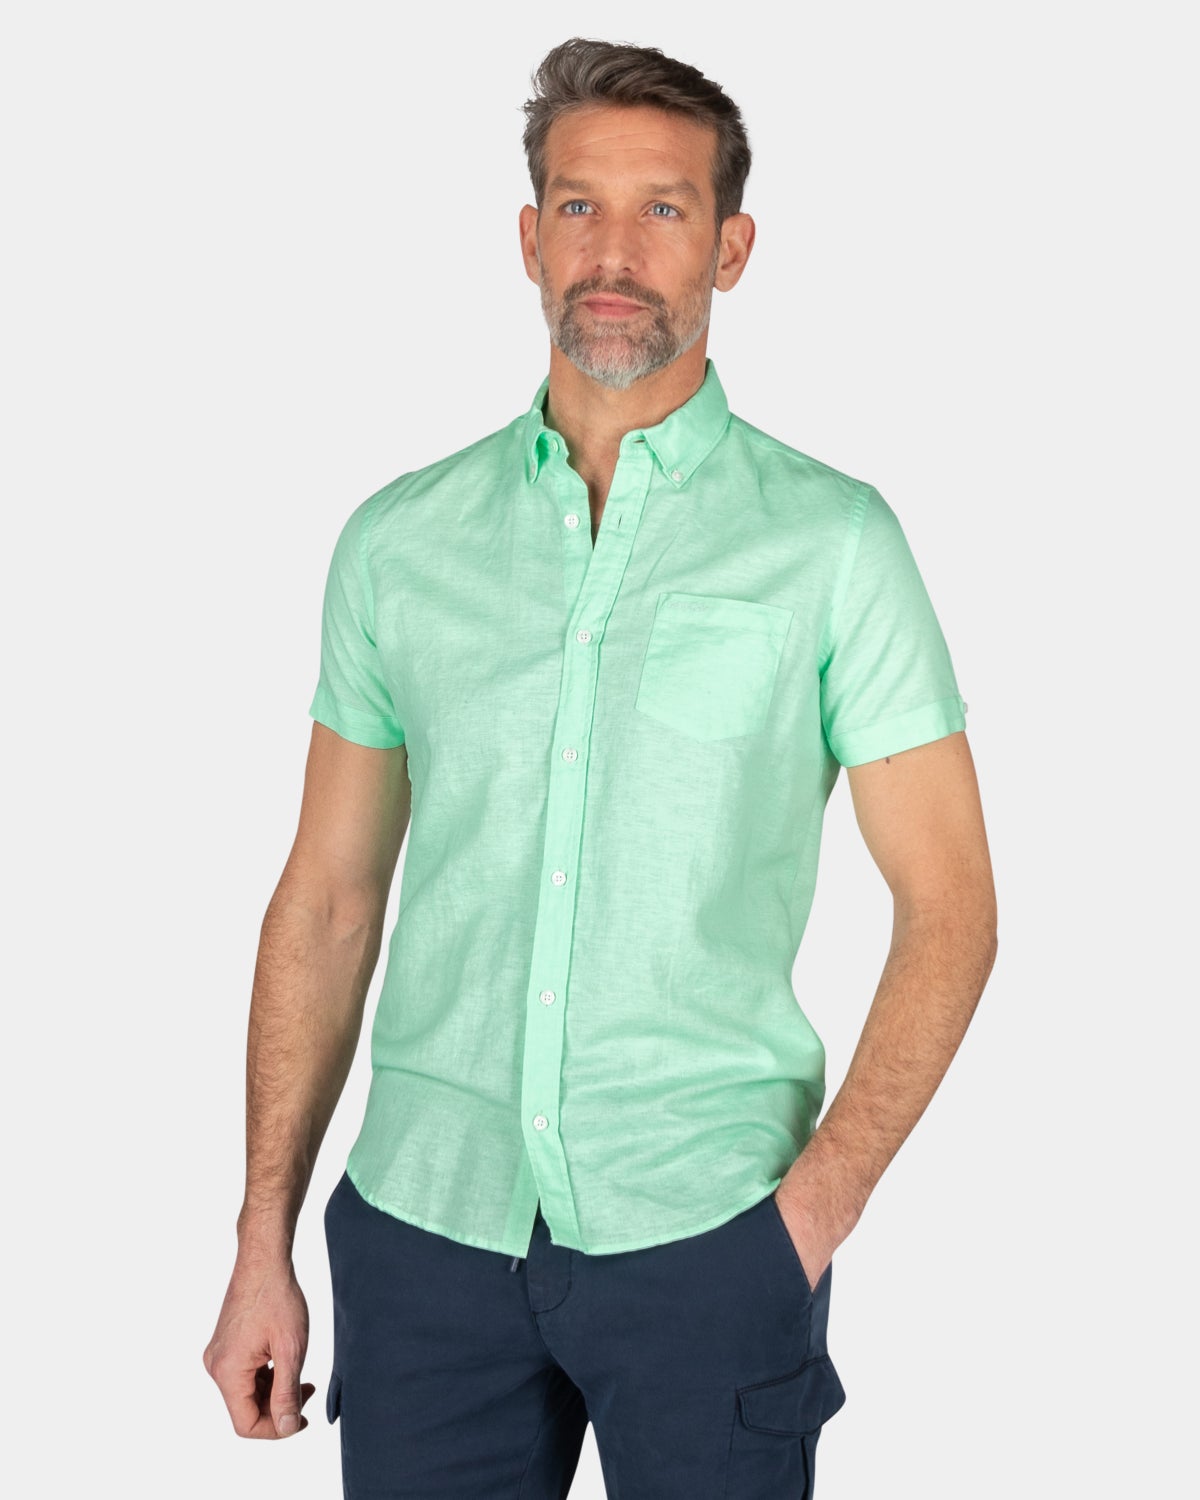 Plain shirt short sleeves - Teal Green